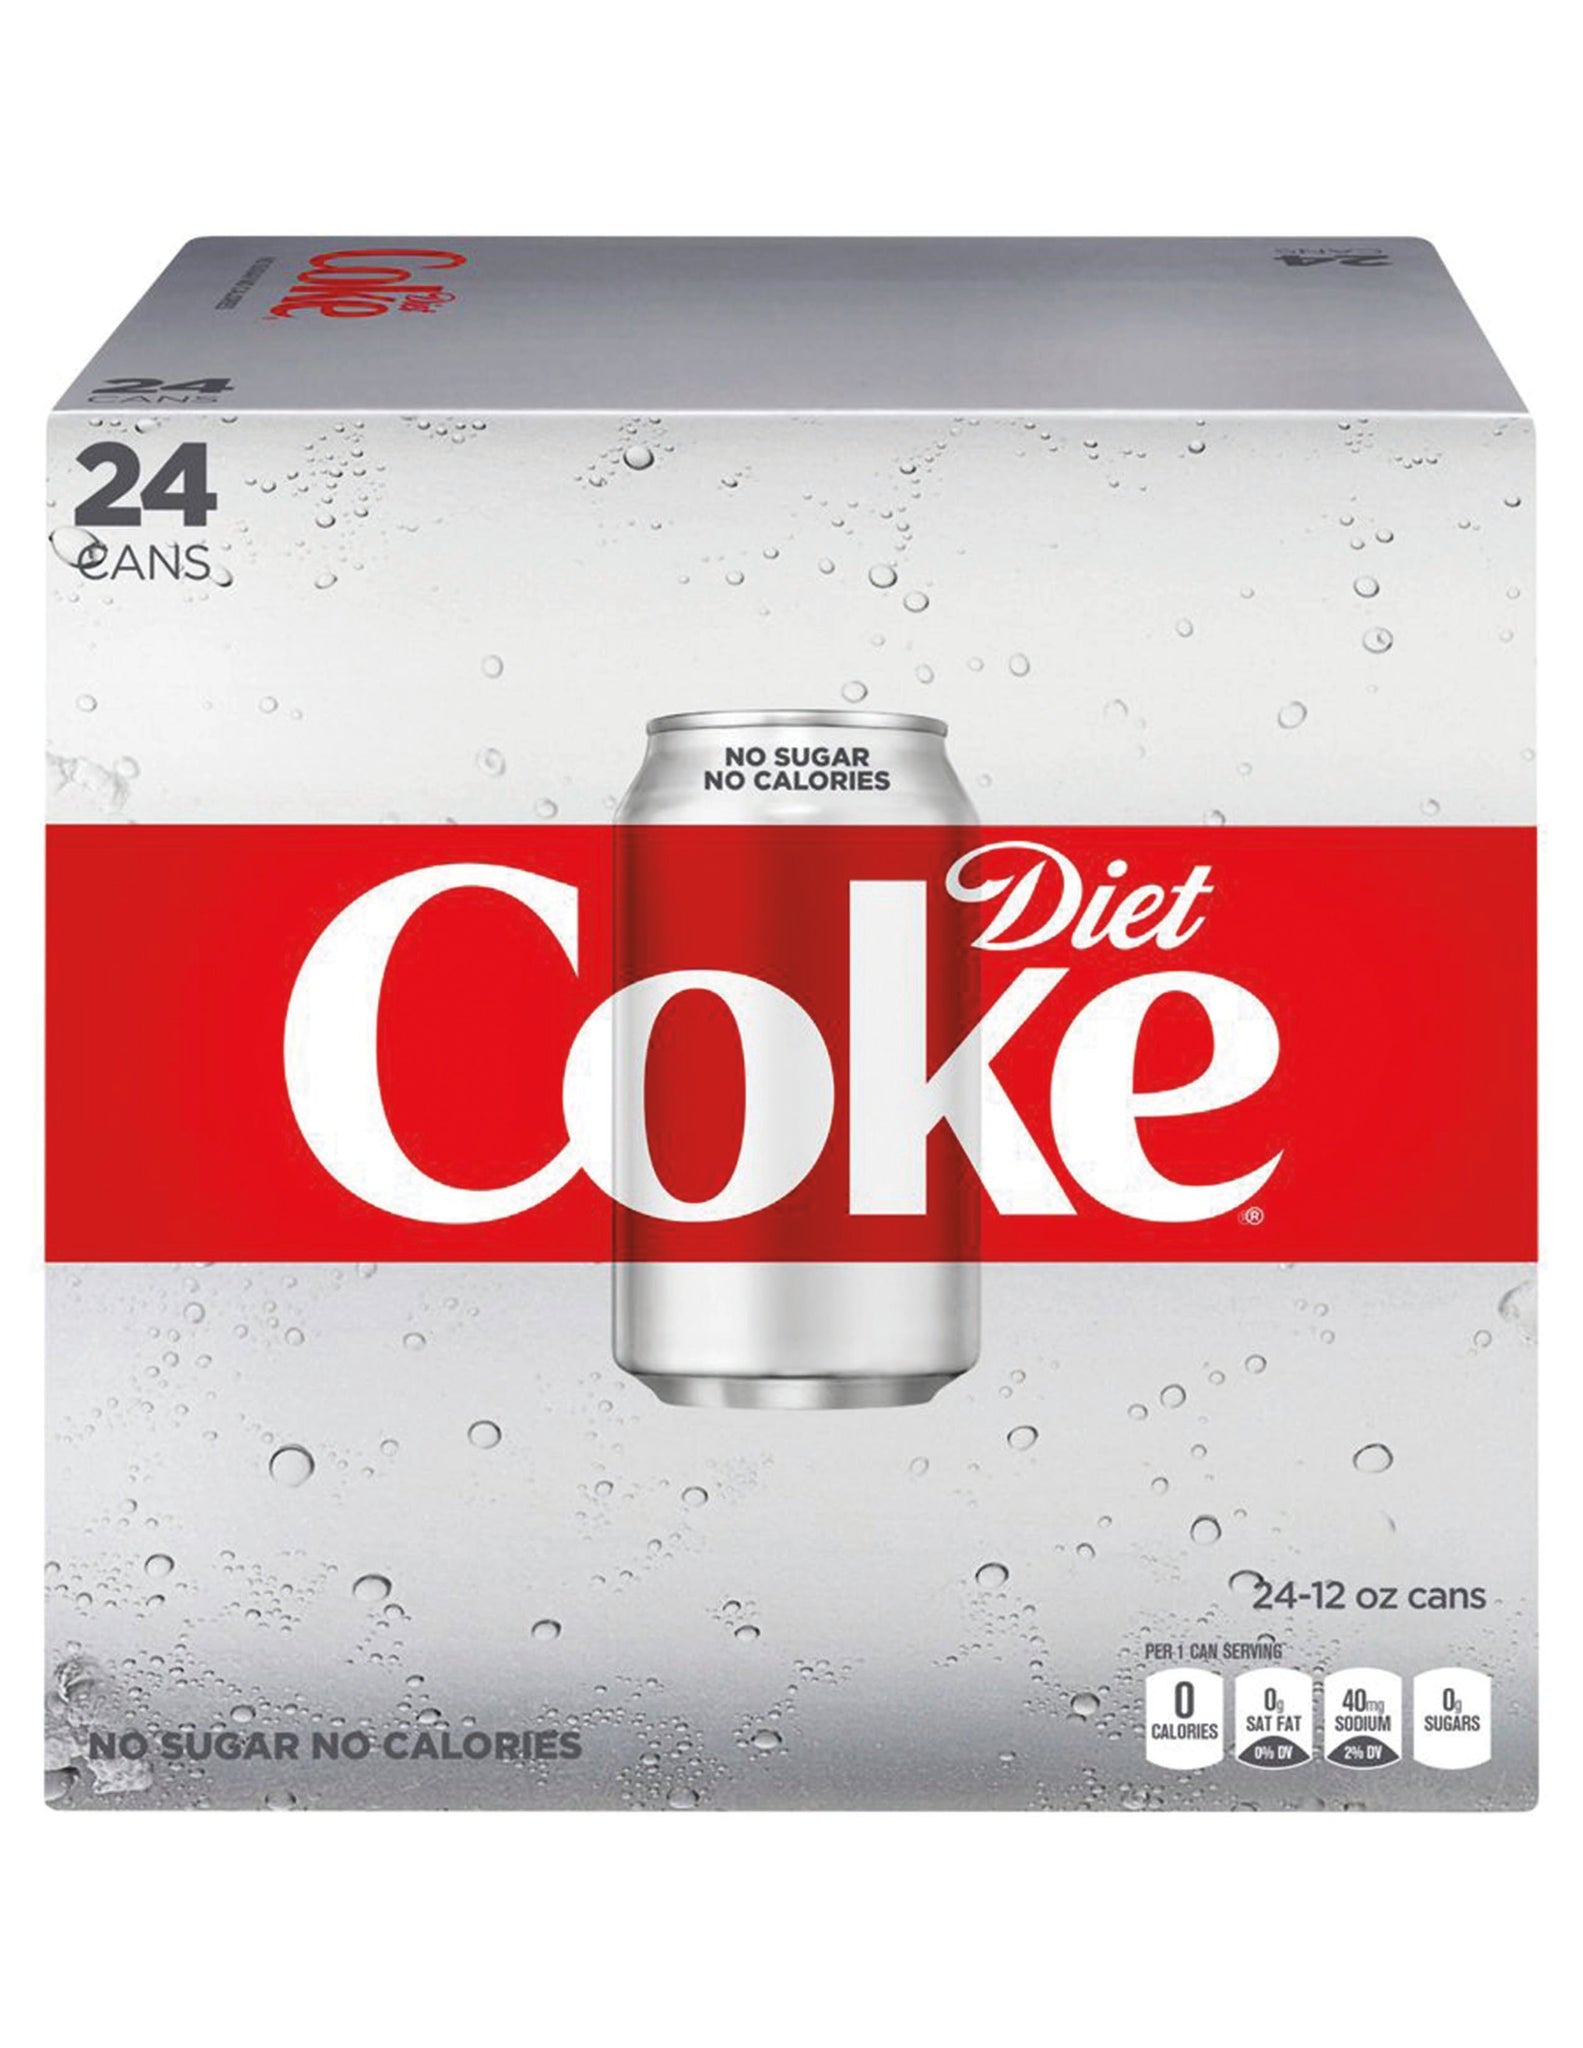 stl>Coke Diet - 24 Pack